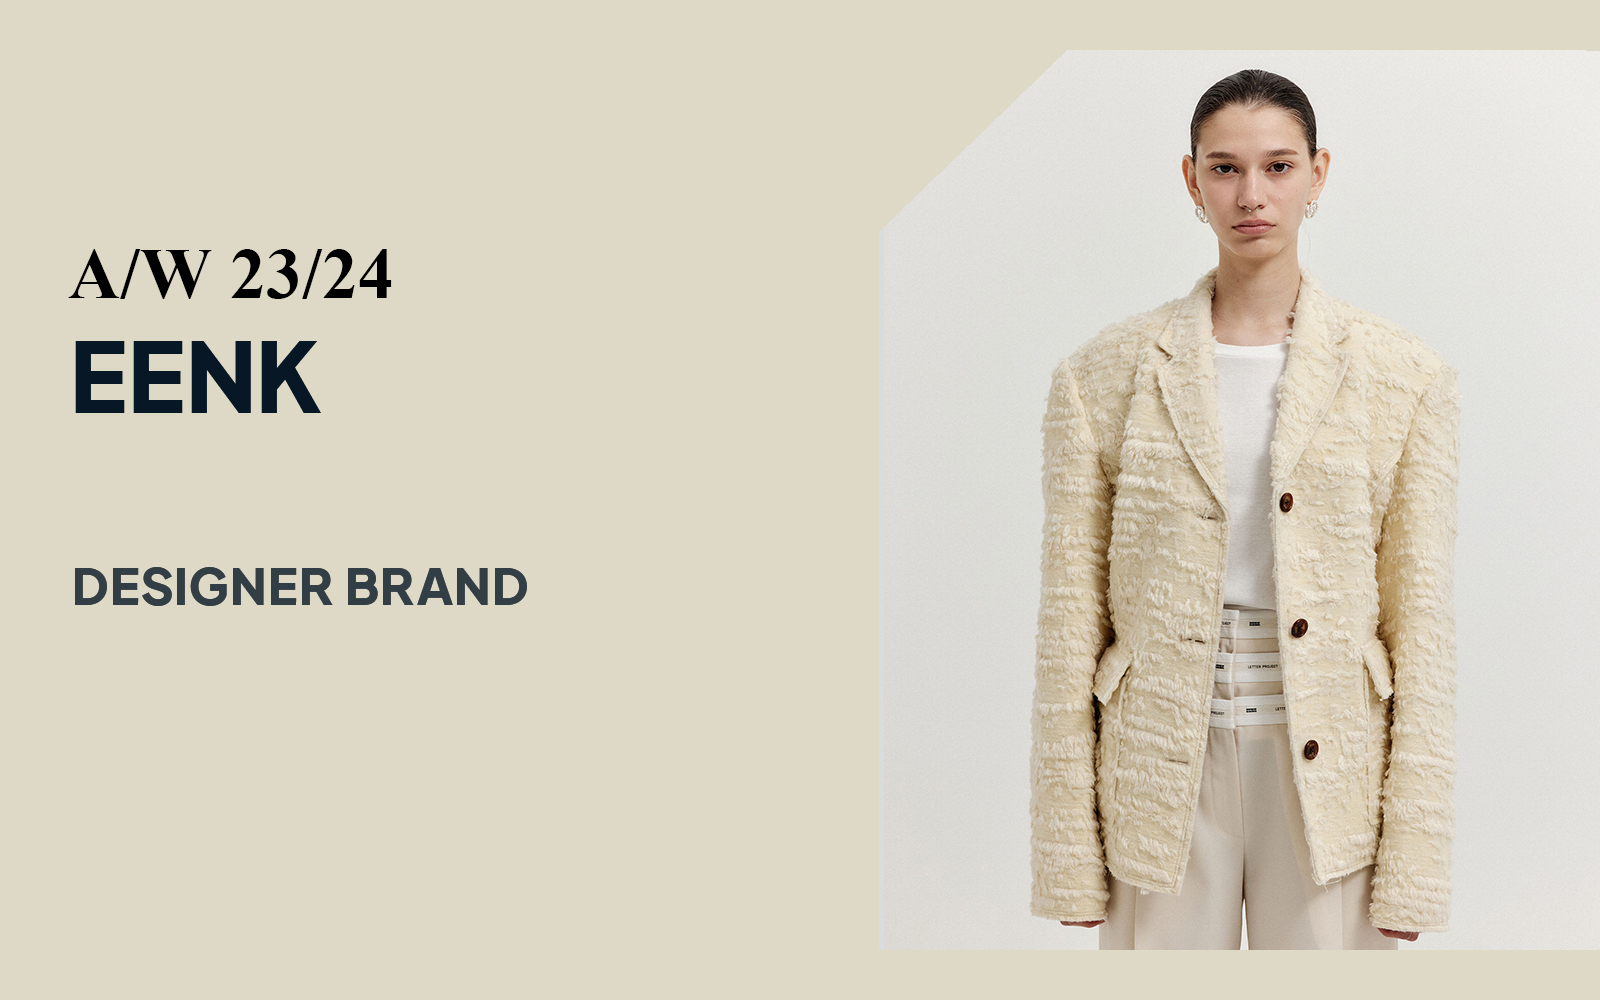 Modern Retro -- The Analysis of EENK The Womenswear Designer Brand